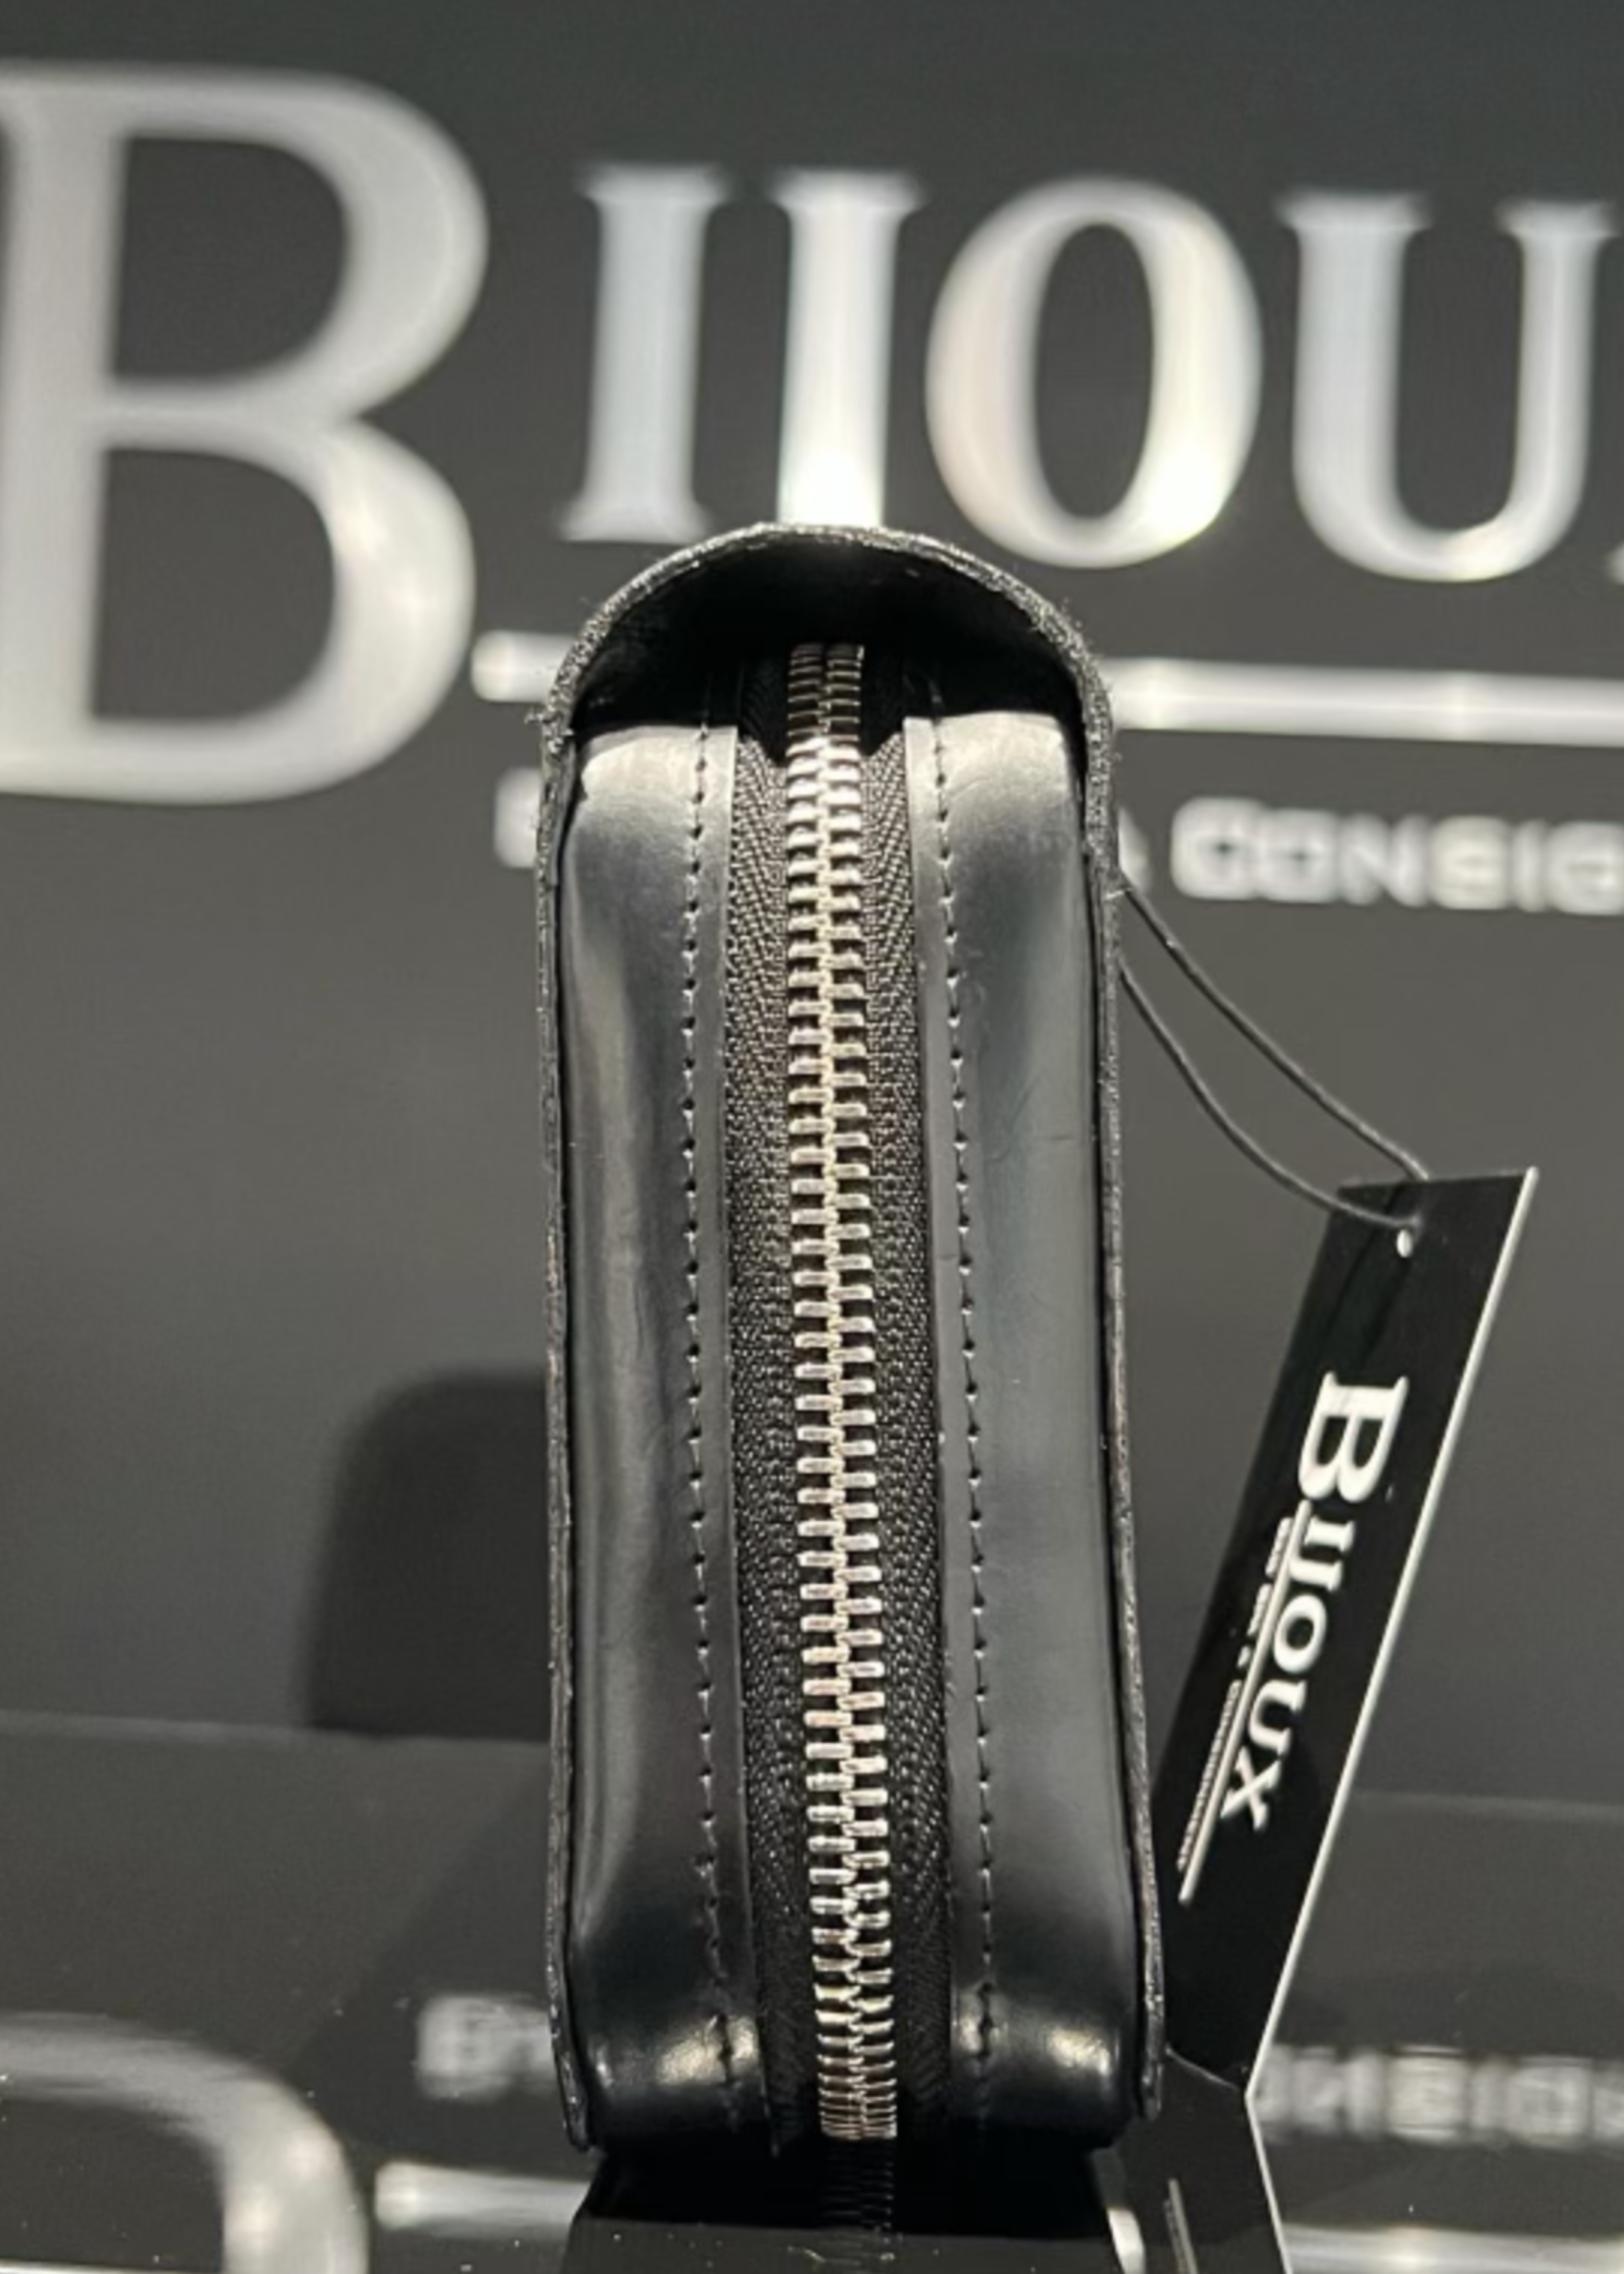 Louis Vuitton Zippy XL - Bijoux Bag Spa & Consignment